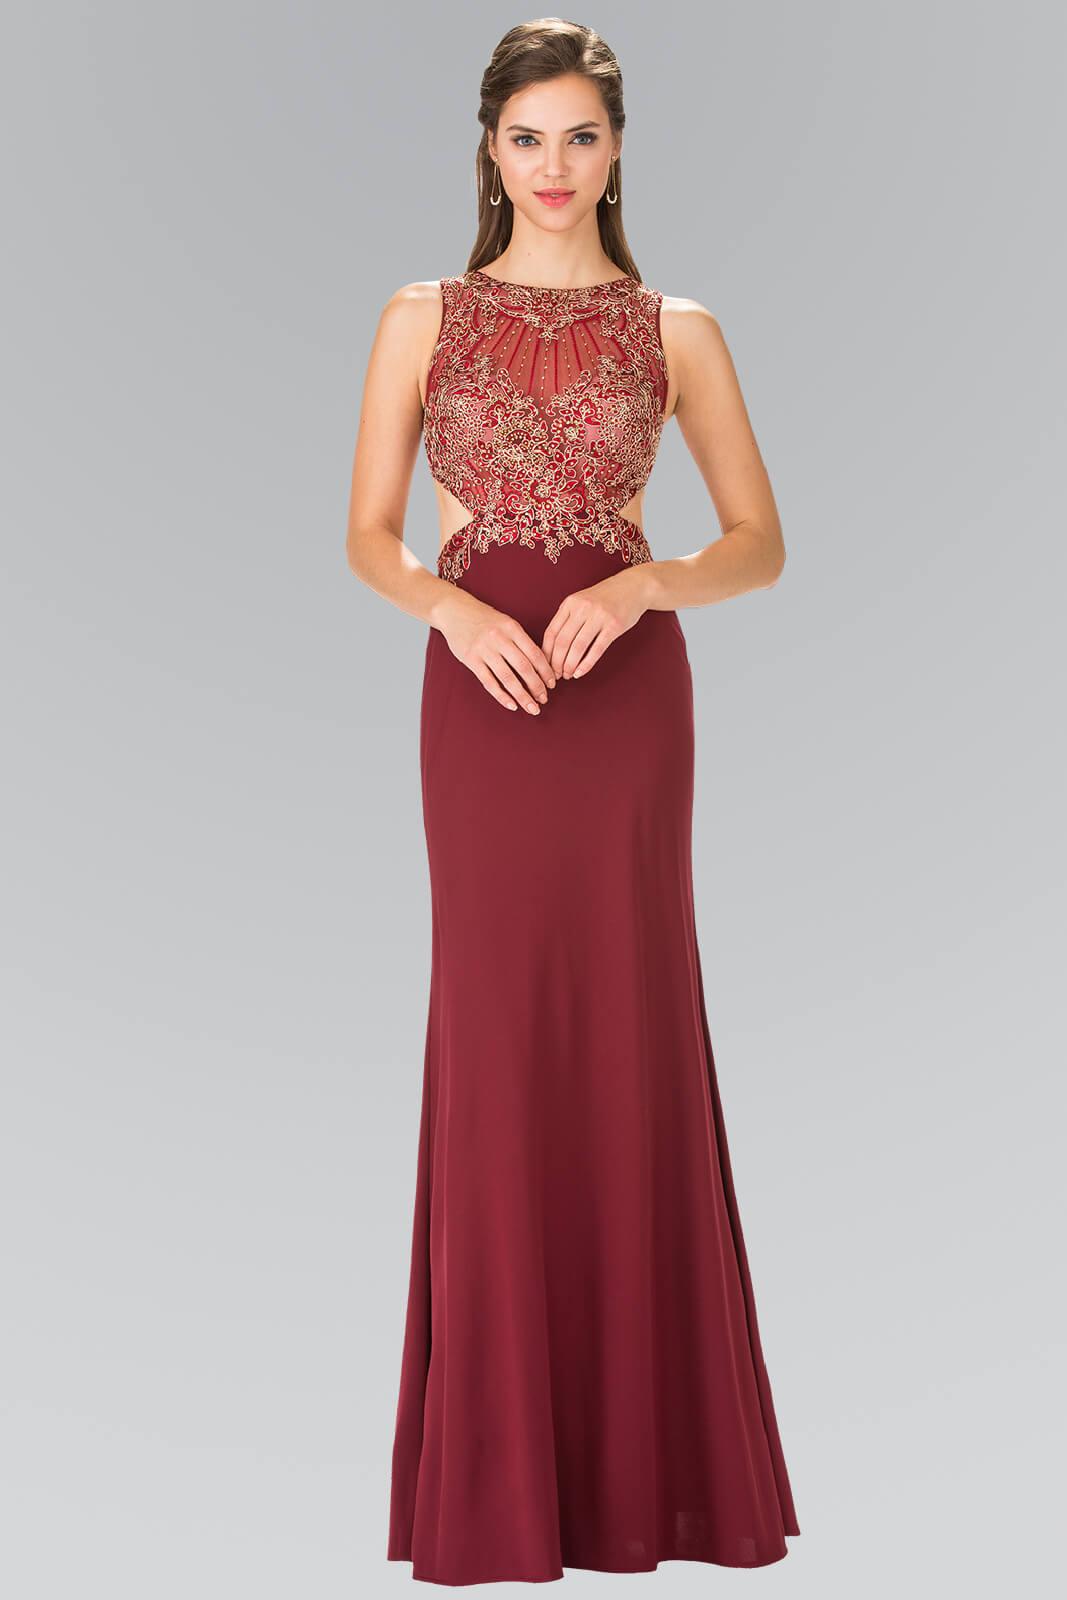 Long Formal Side Cut Dress Evening Prom Gown - The Dress Outlet Elizabeth K